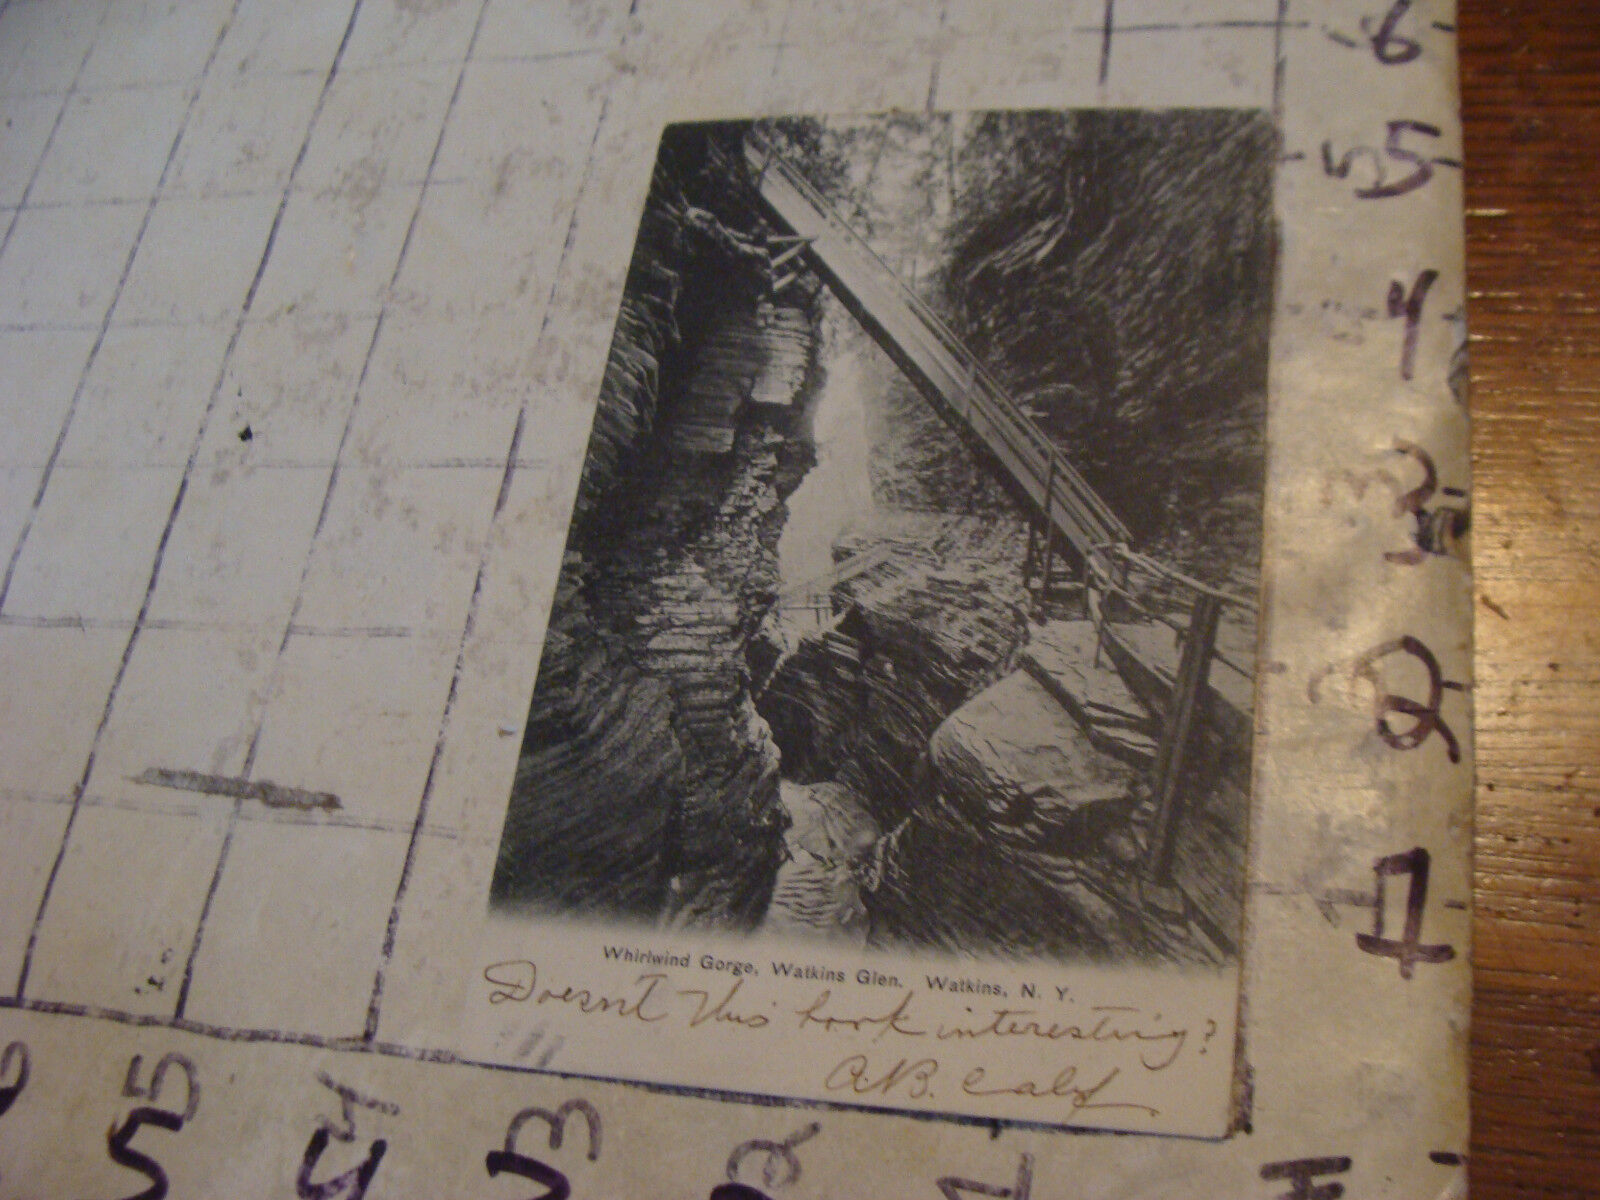 Orig Vint post card 1906 WHIRLAND GORGE, WALKINS GLEN. WATKINS NY